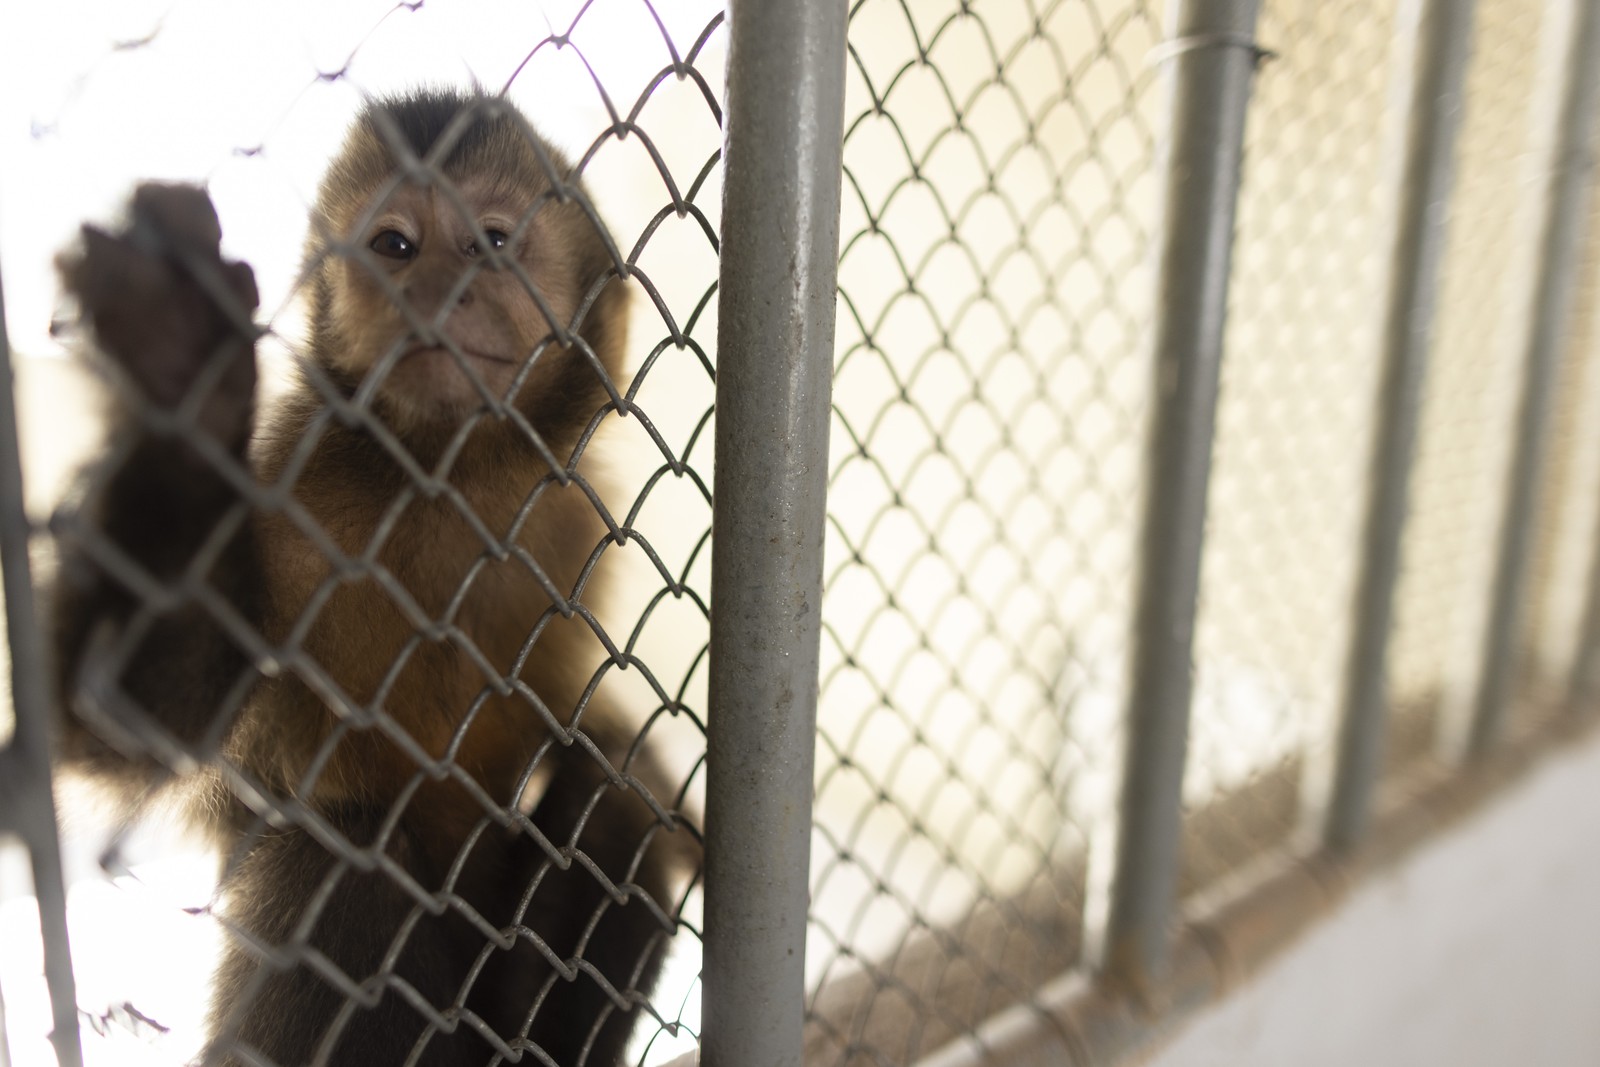 Macaco na unidade do Cetas  — Foto: Márcia Foletto